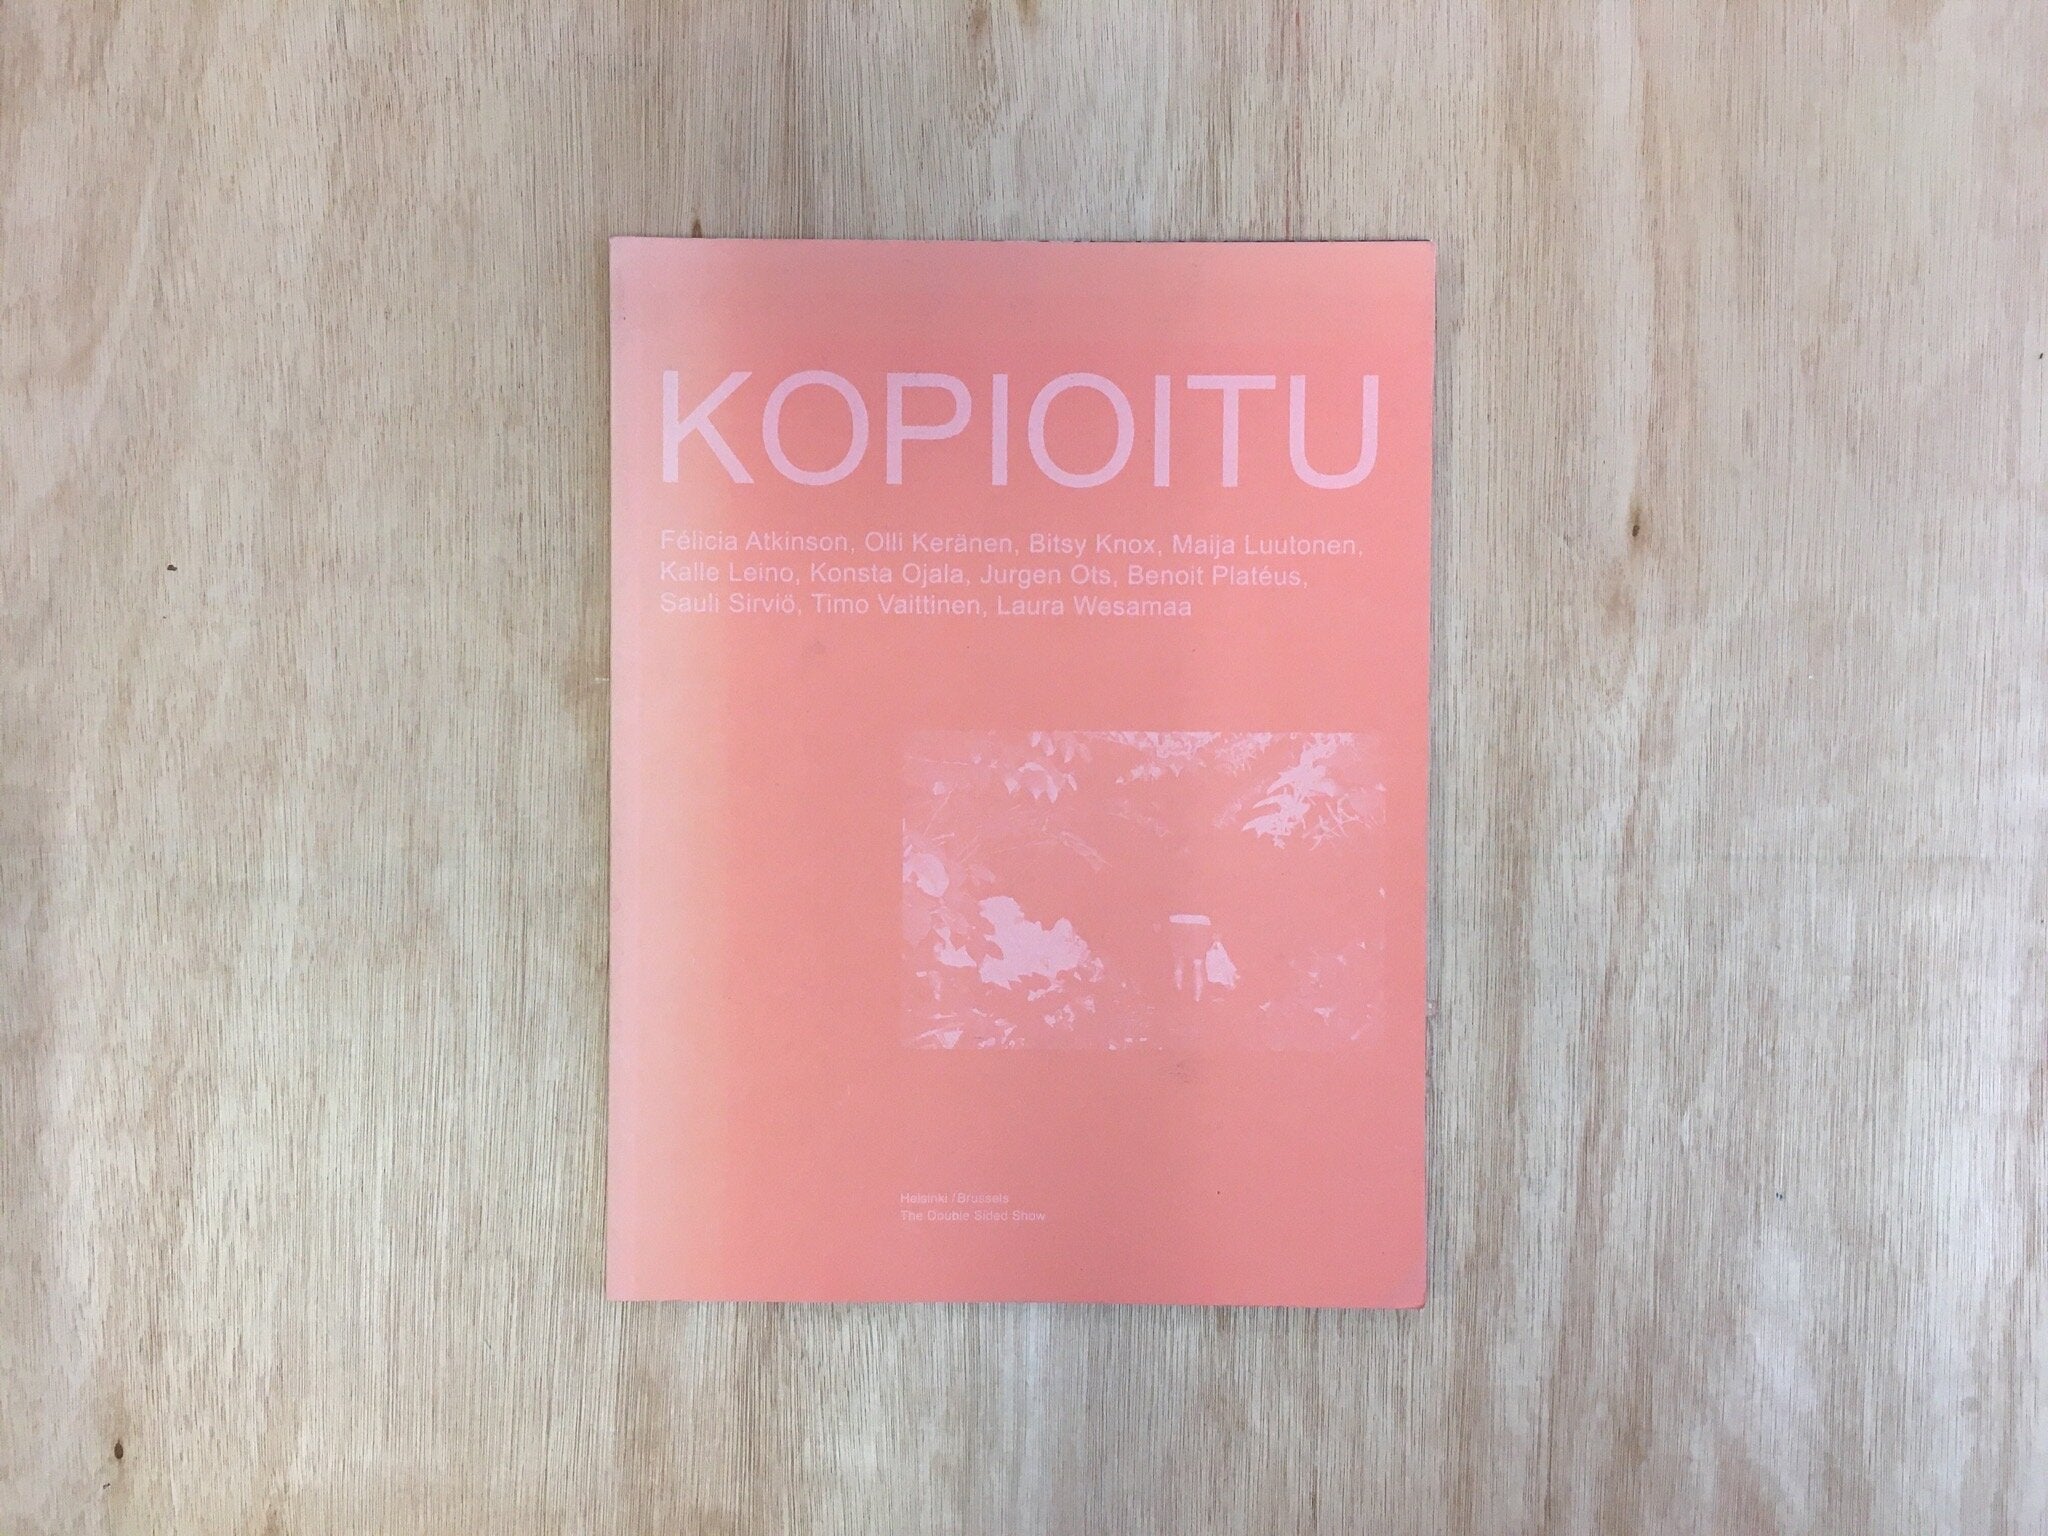 KOPIOITU by Various Artists